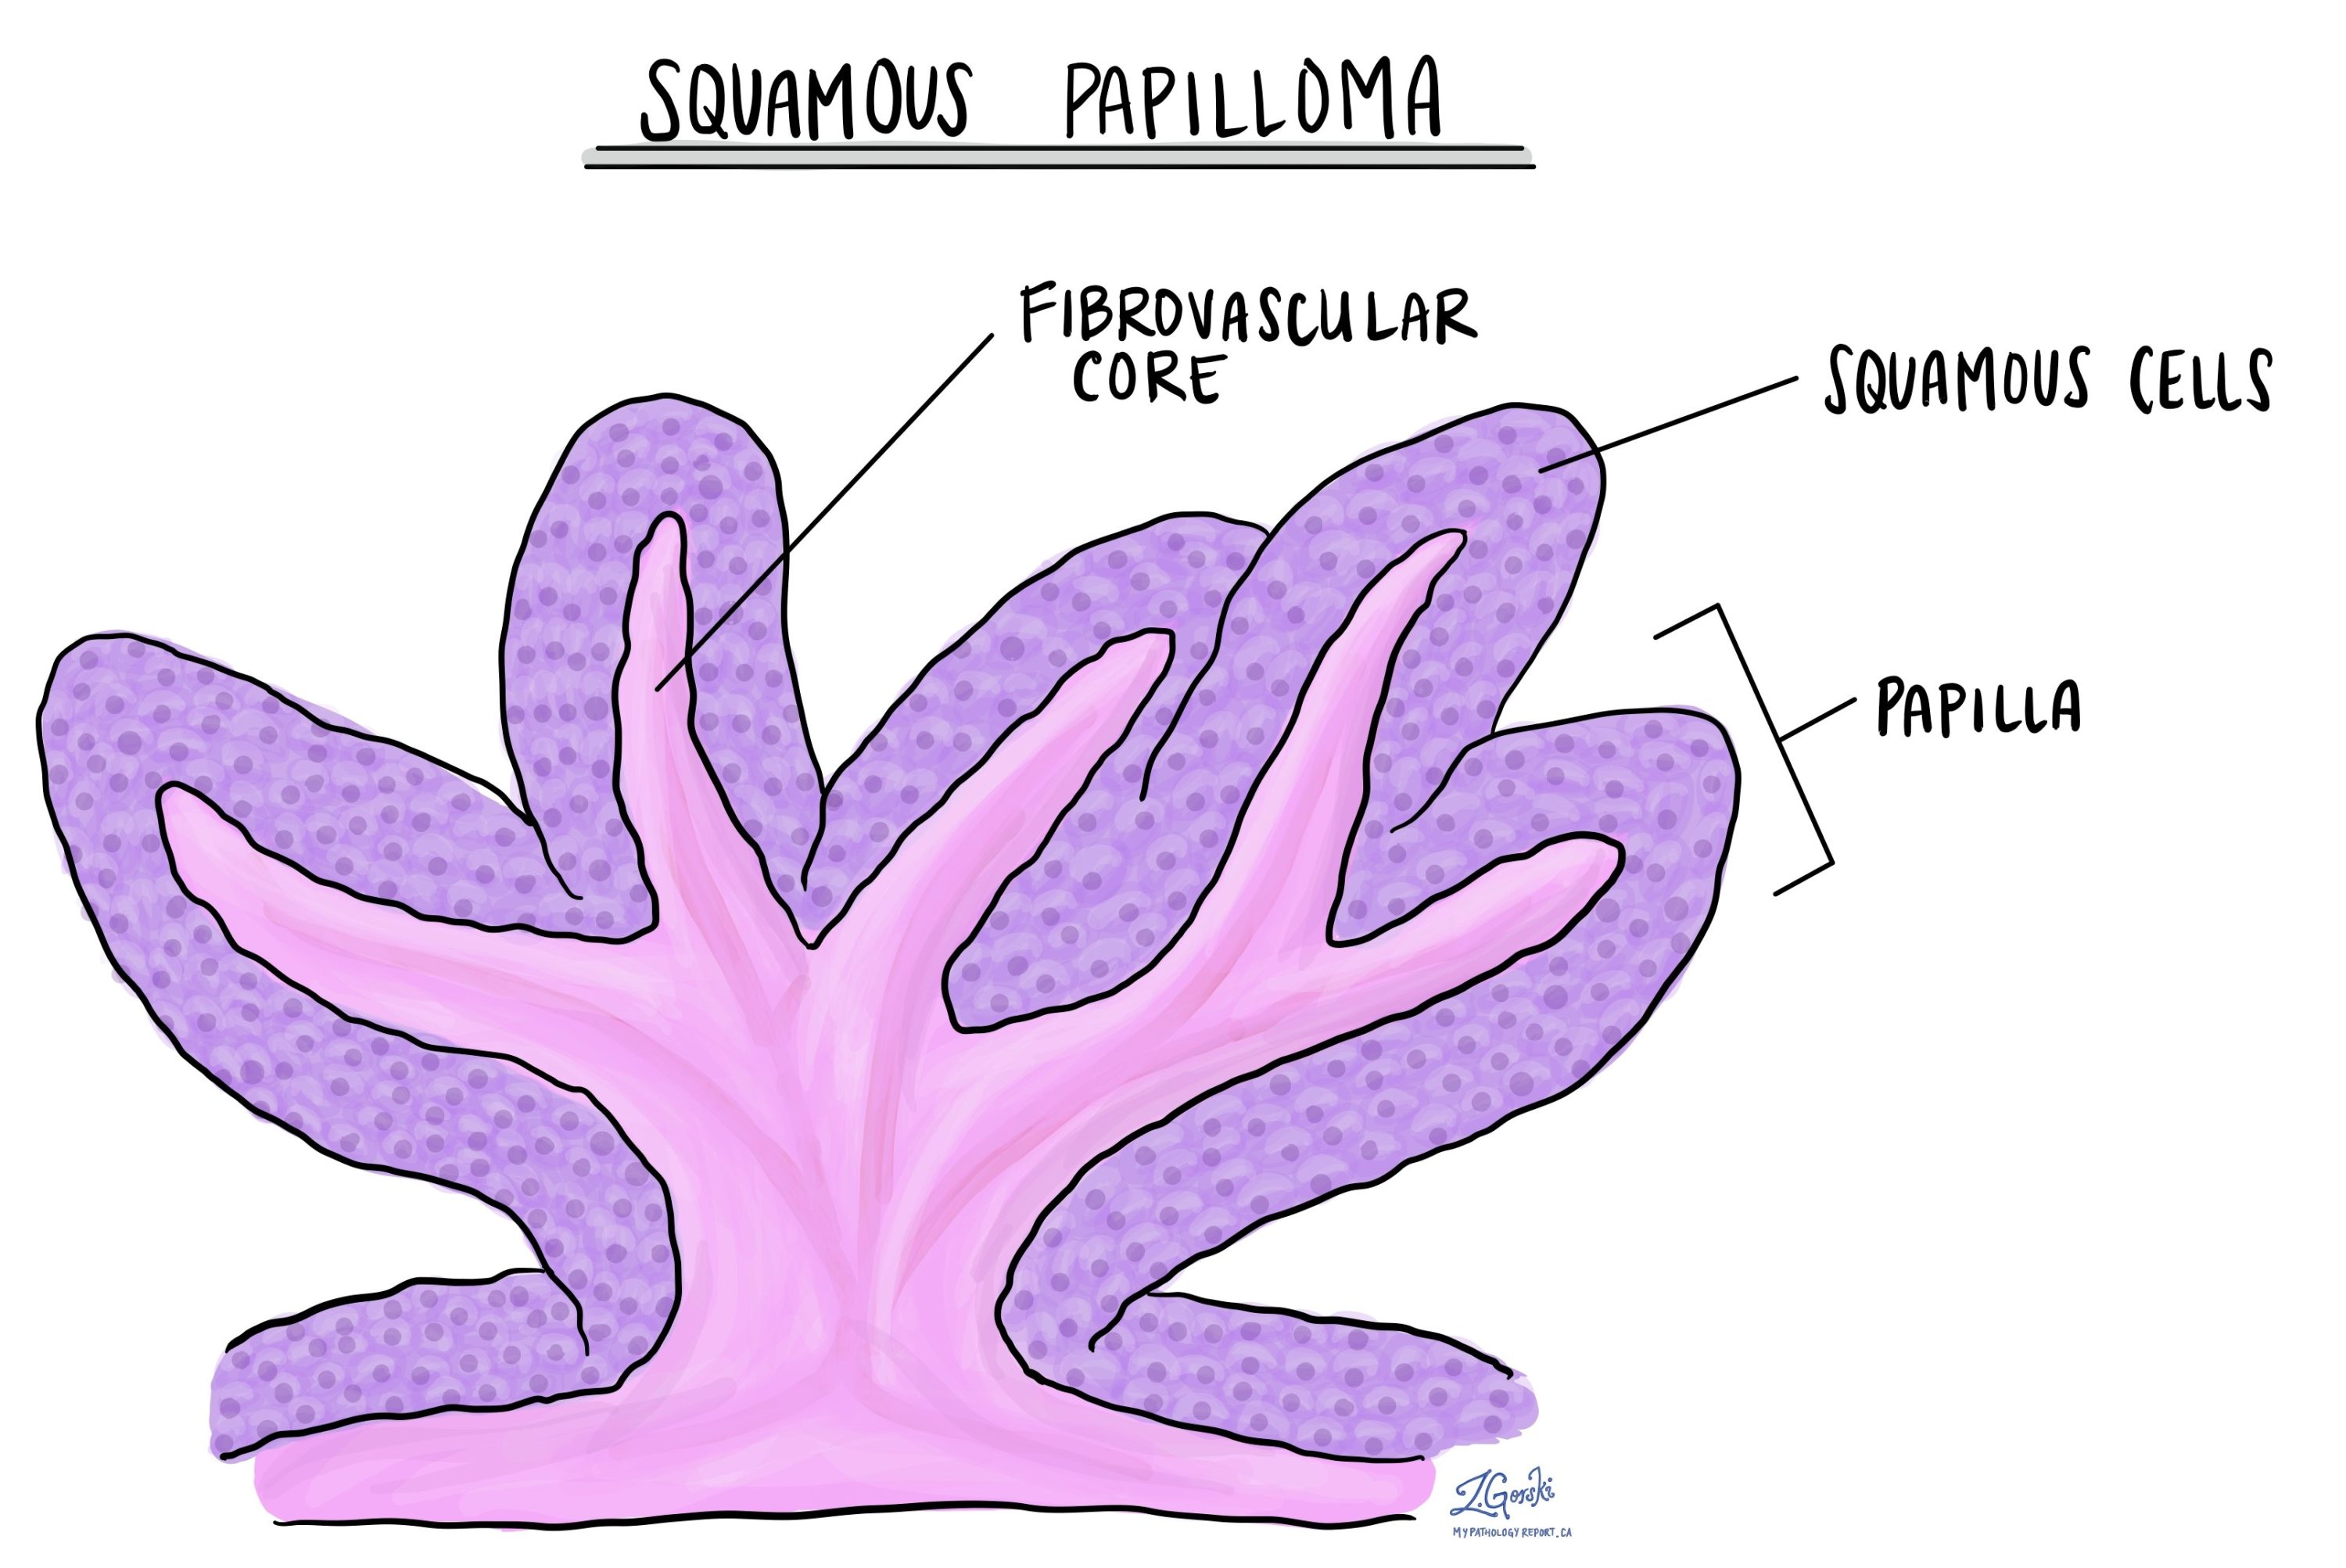 squamous papilloma not hpv